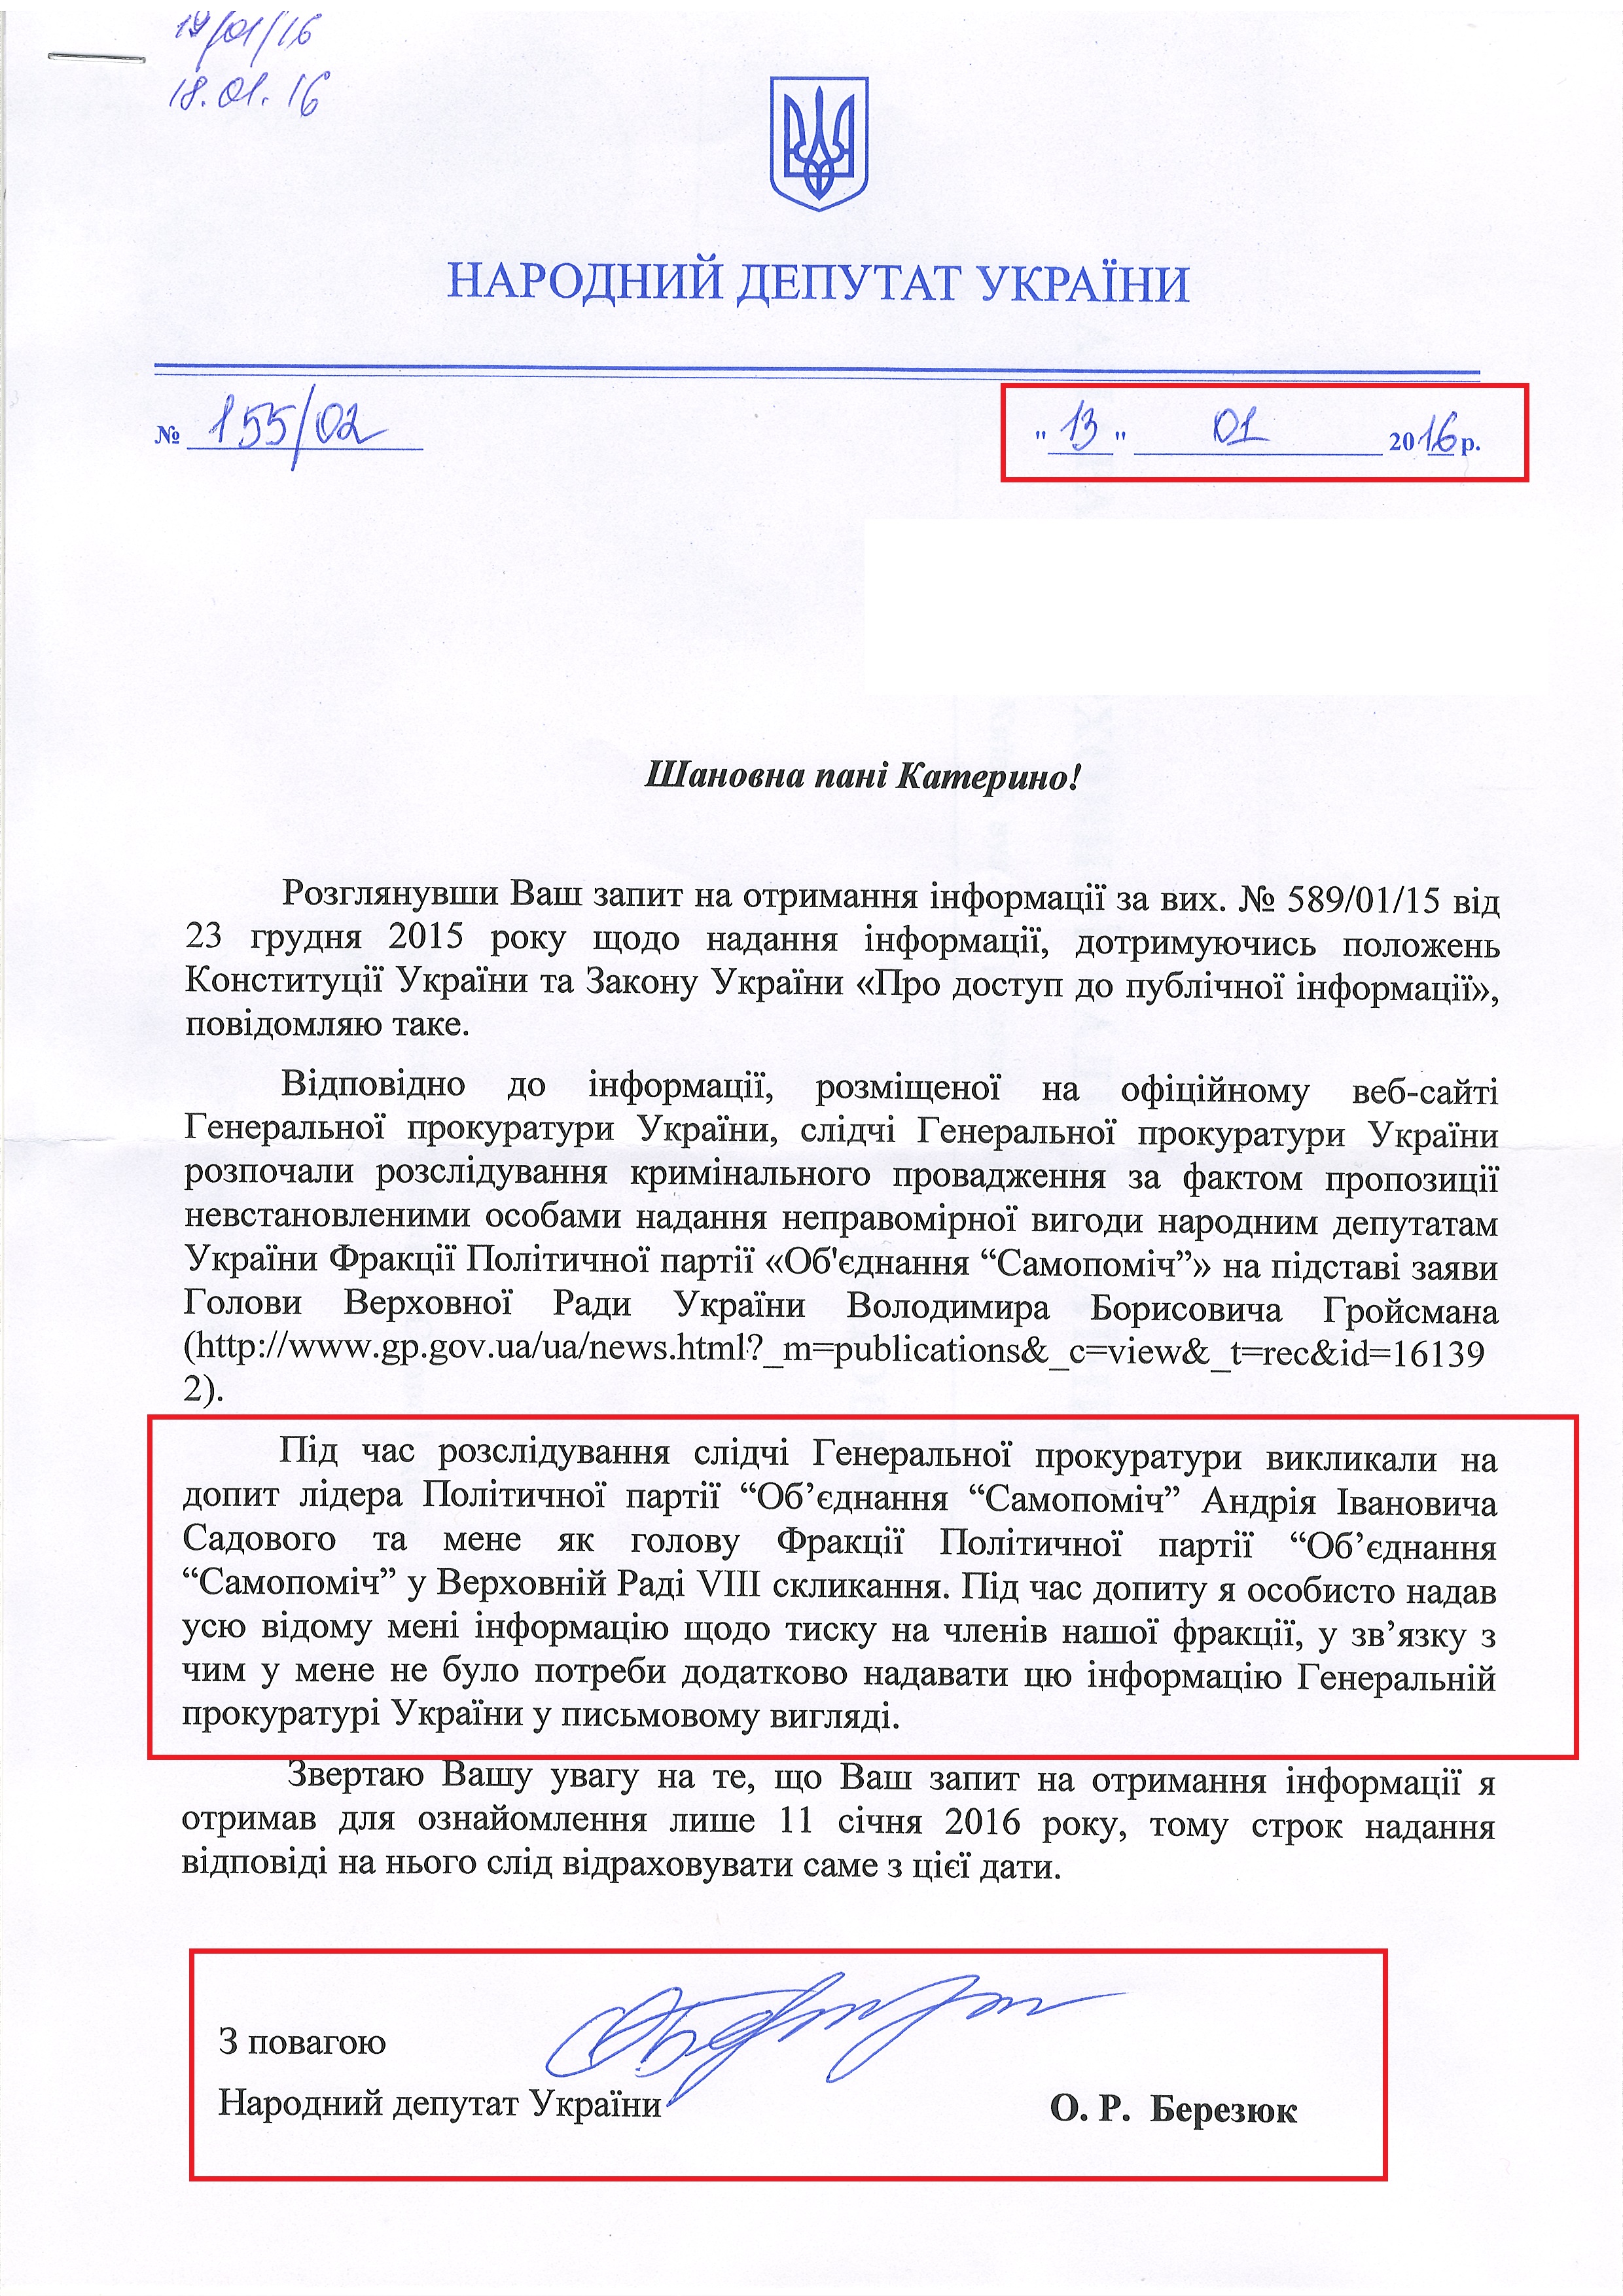 Лист народного депутата України Олега Березюка